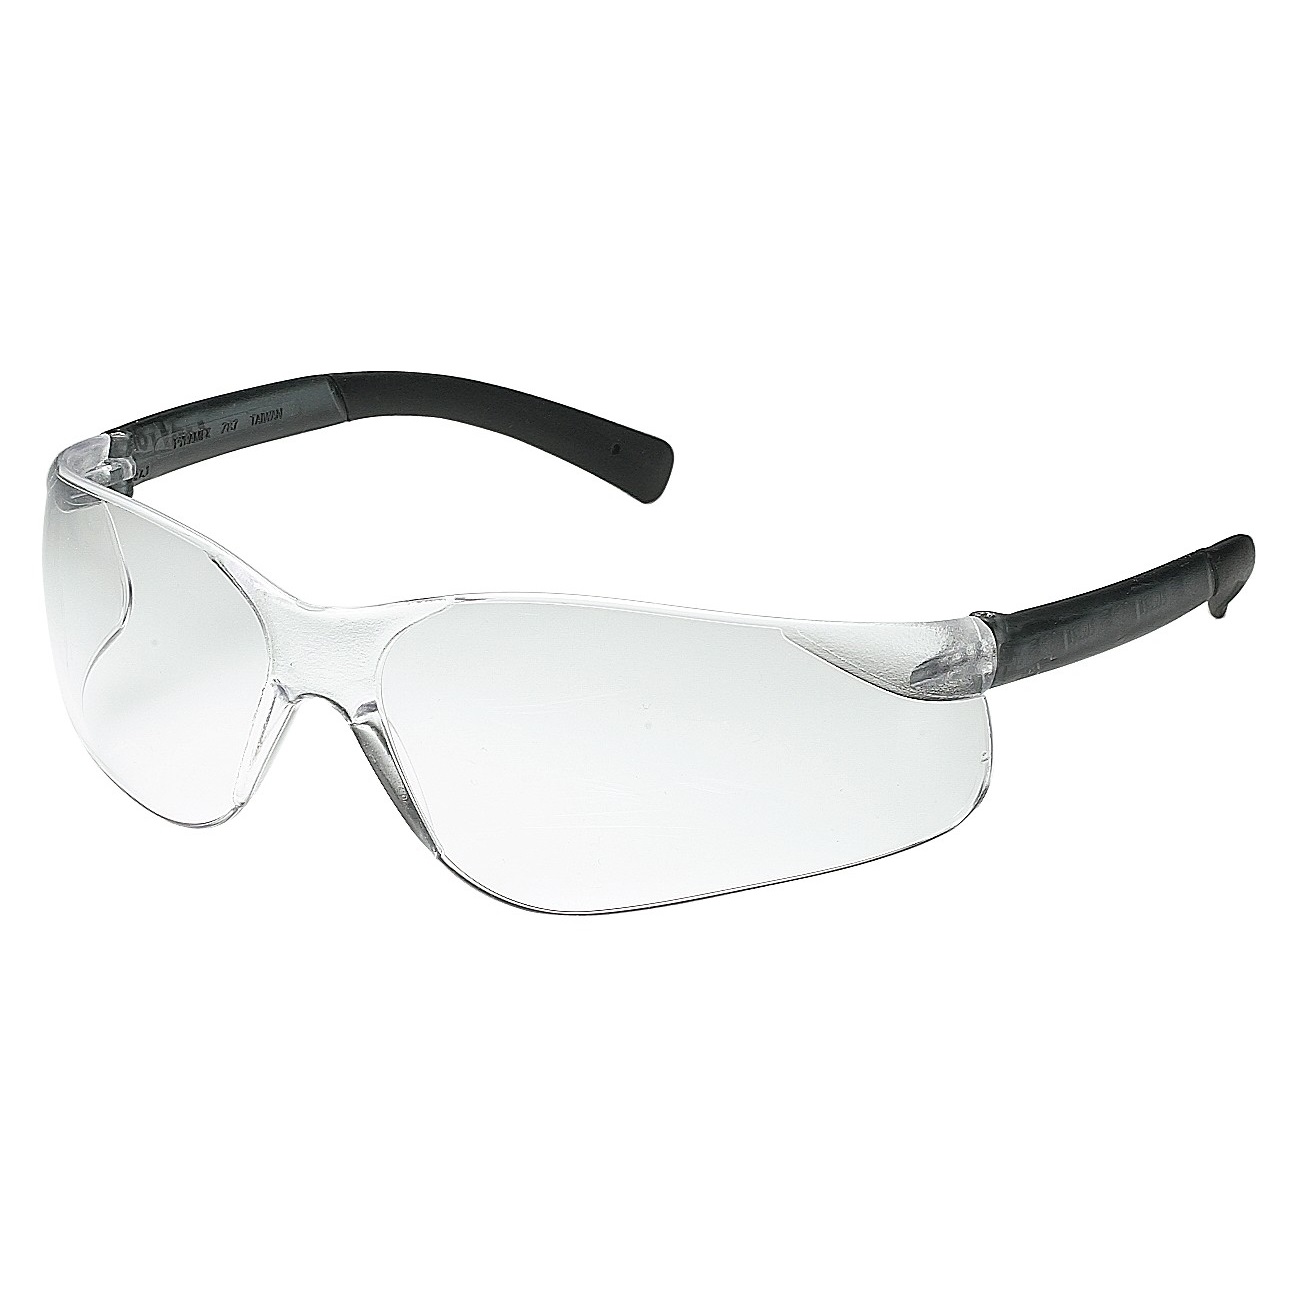 Sportster Safety Glasses, Black Frame, Fog Free Clear Lens